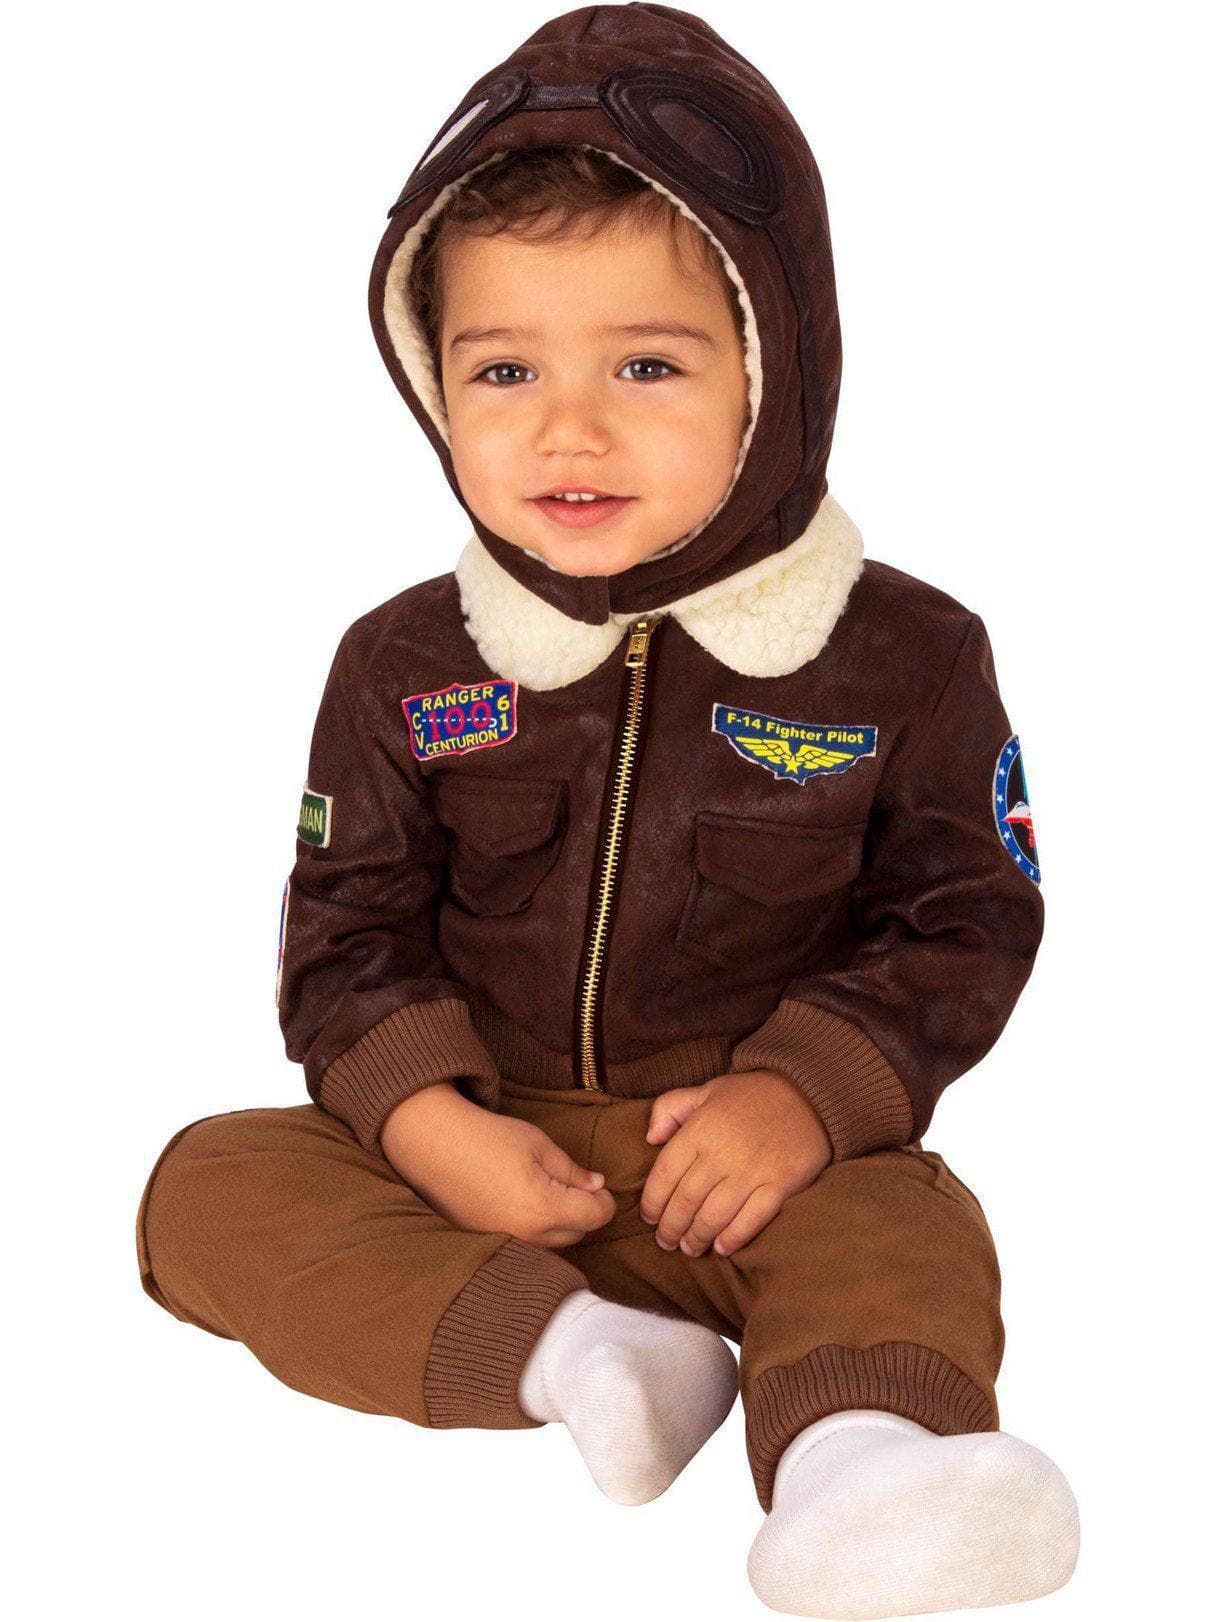 Baby/Toddler Aviator Costume - costumes.com